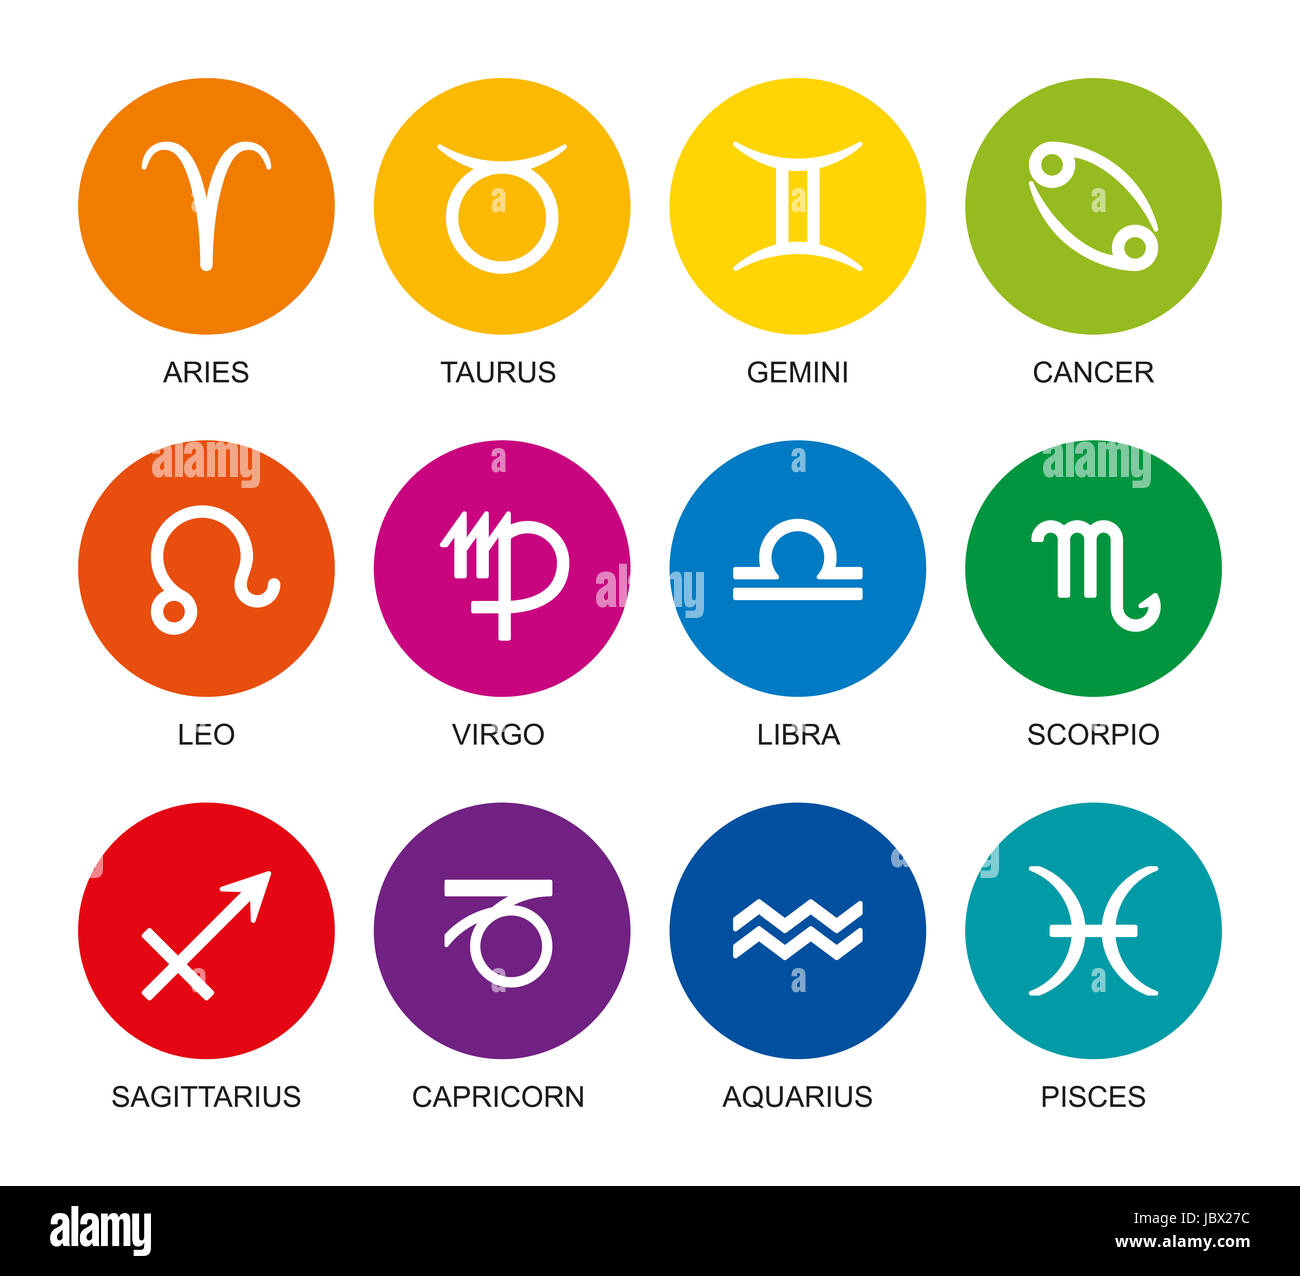 Cancer Zodiac Color Chart